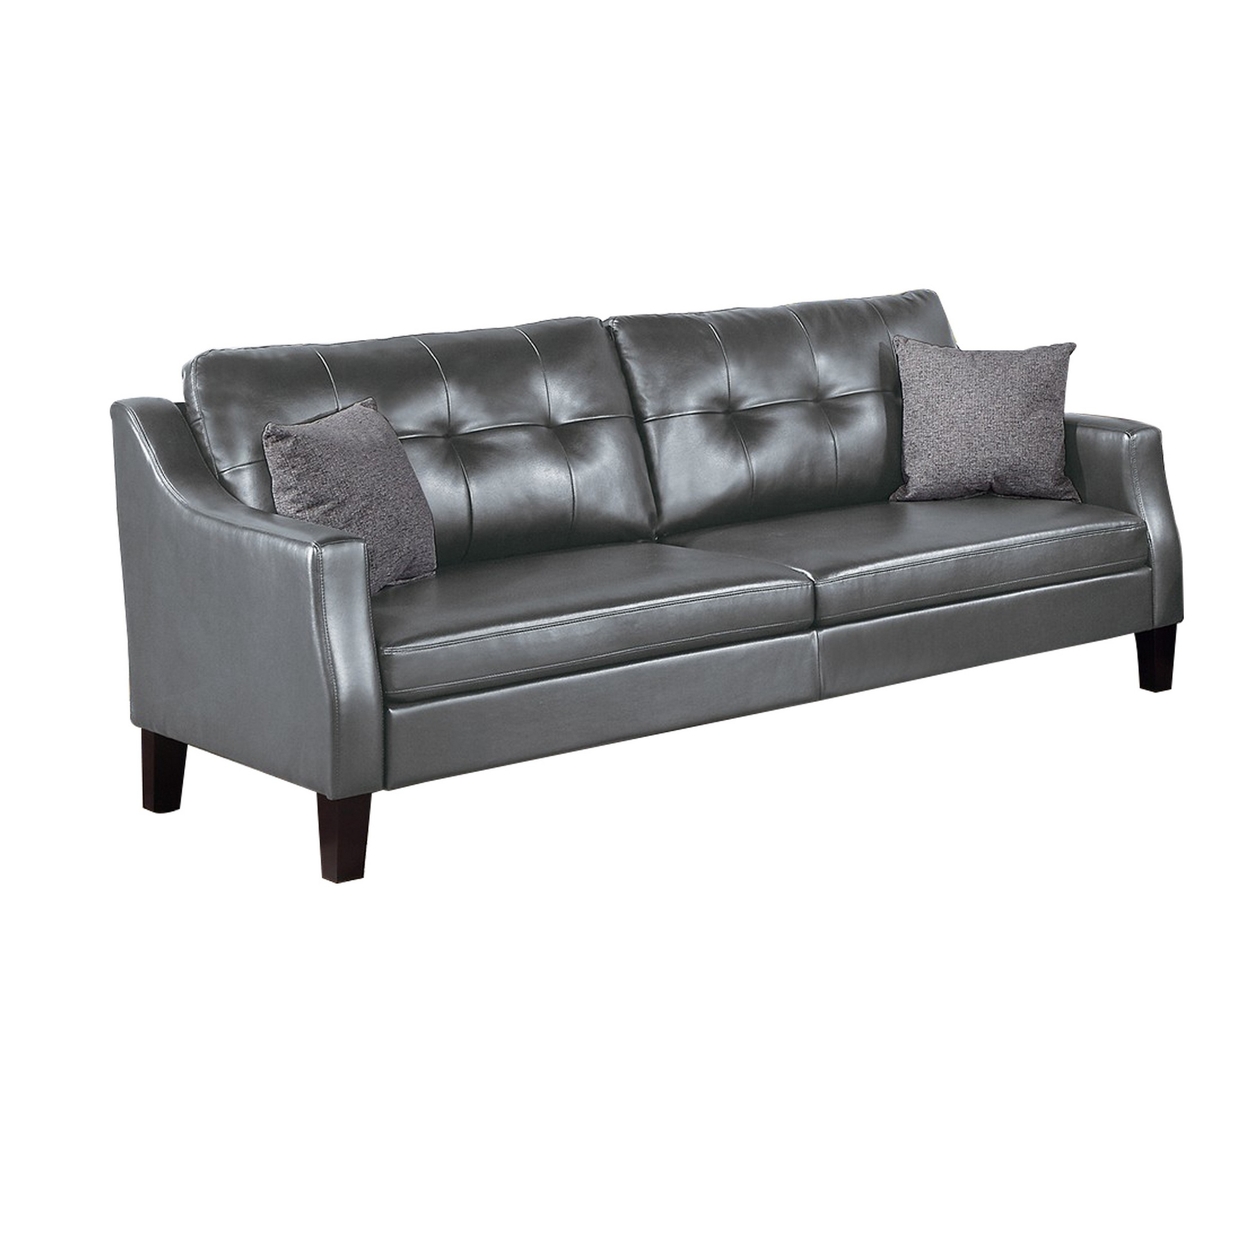 Hera 2 Piece Sofa And Loveseat Set, 4 Pillows, Classic Gray Faux Leather- Saltoro Sherpi